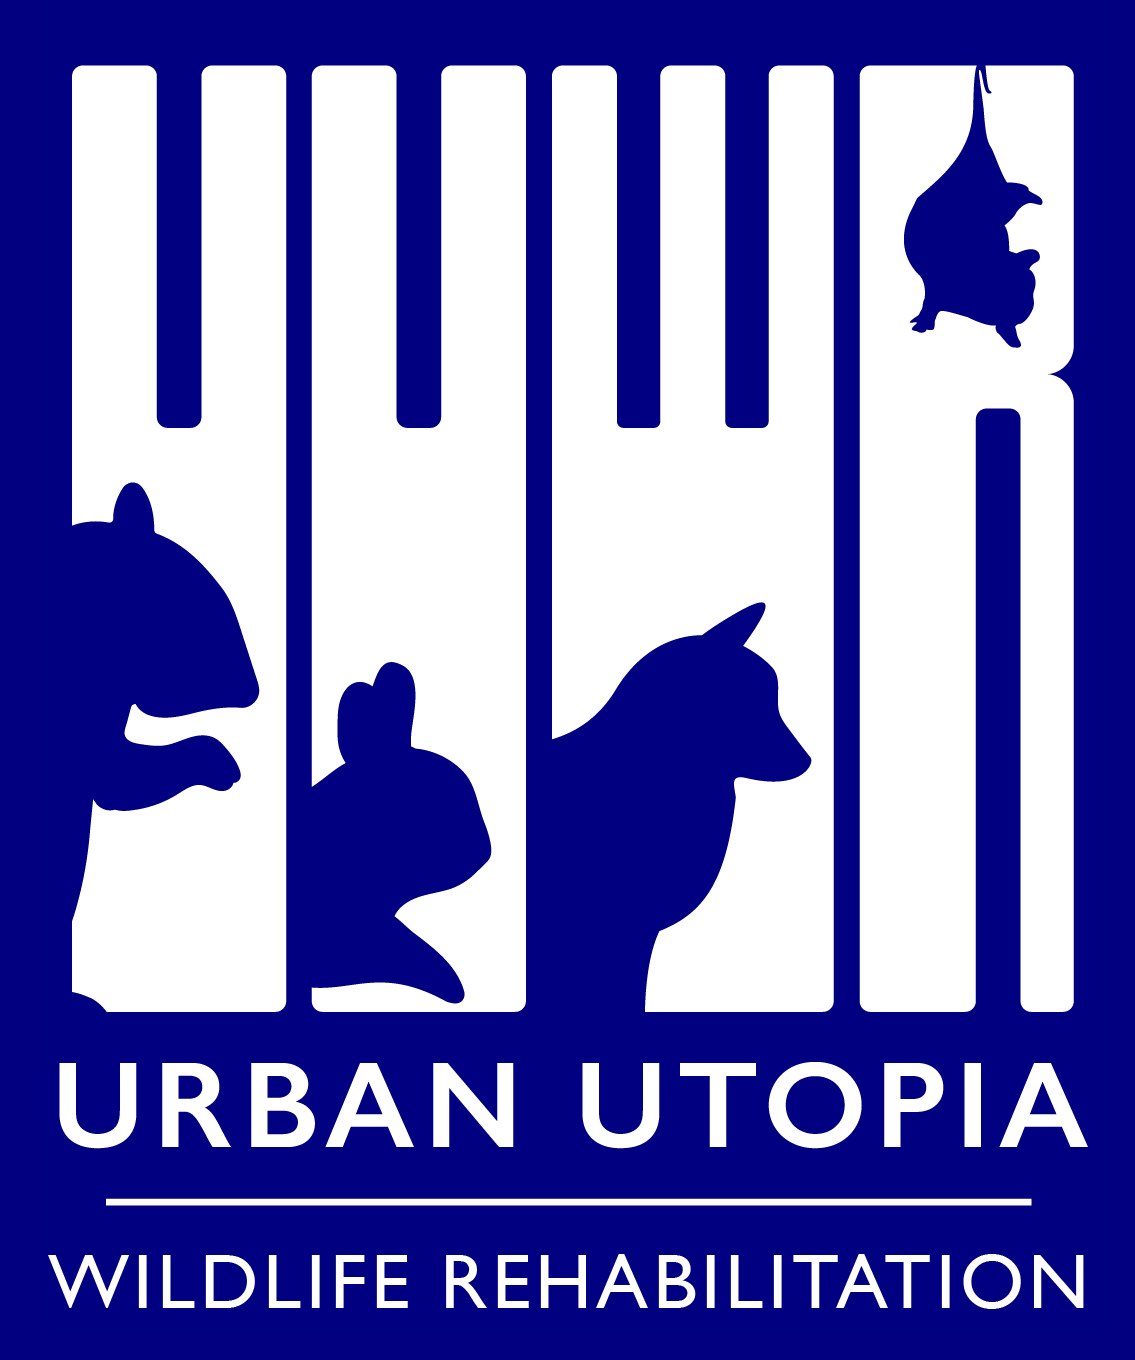 Urban Utopia Wildlife Rehabilitation